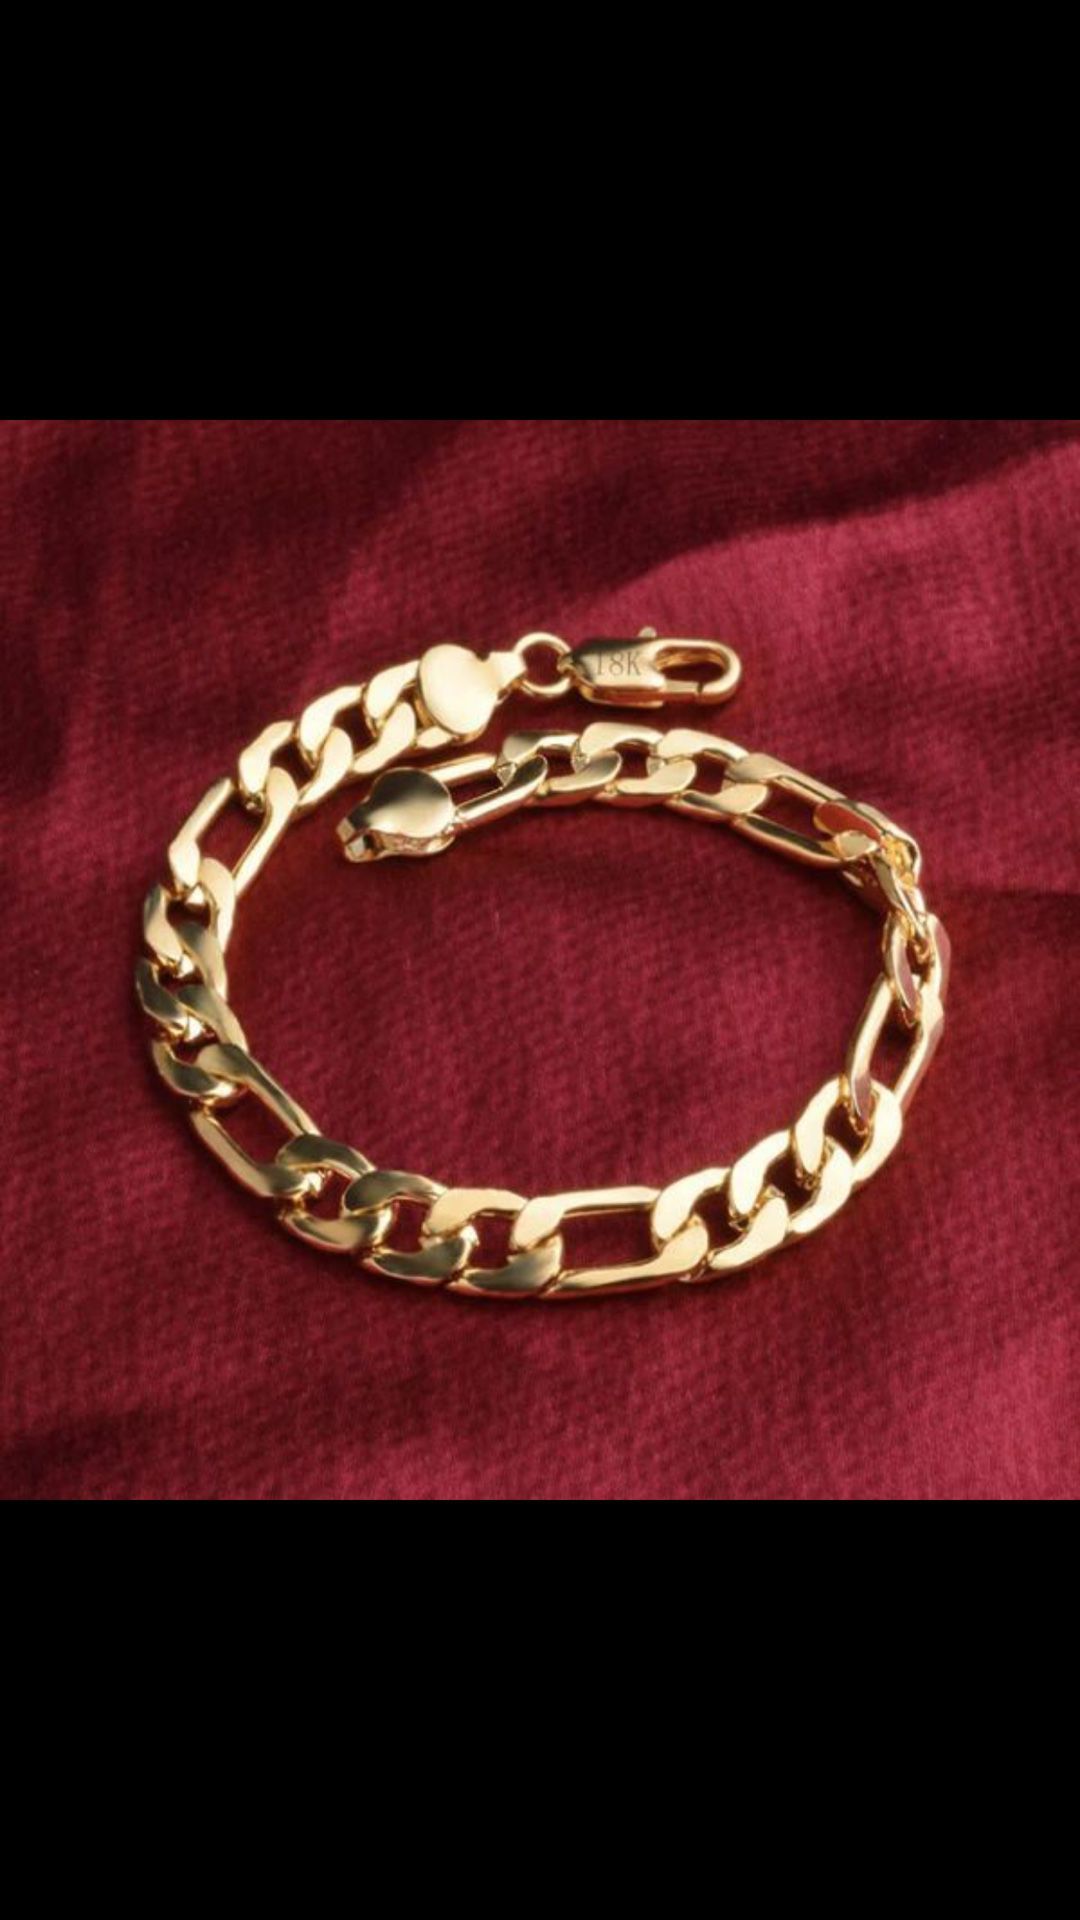 18k gold plated 8mm 8” long bracelet bangle women’s jewelry accessory